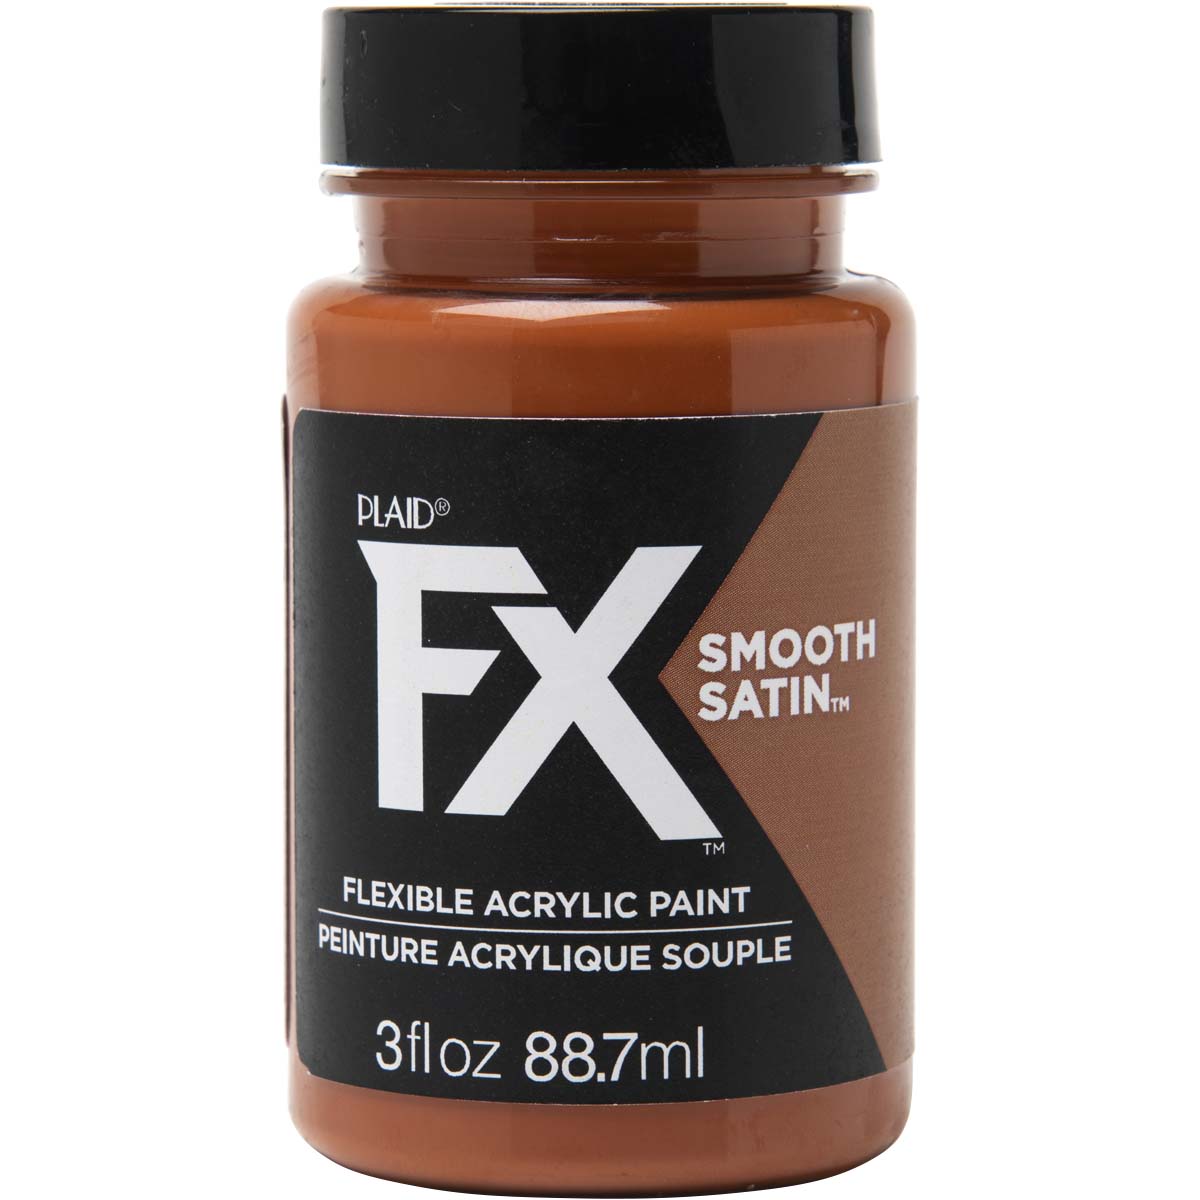 PlaidFX Smooth Satin Flexible Acrylic Paint - Mudflow, 3 oz. - 36869